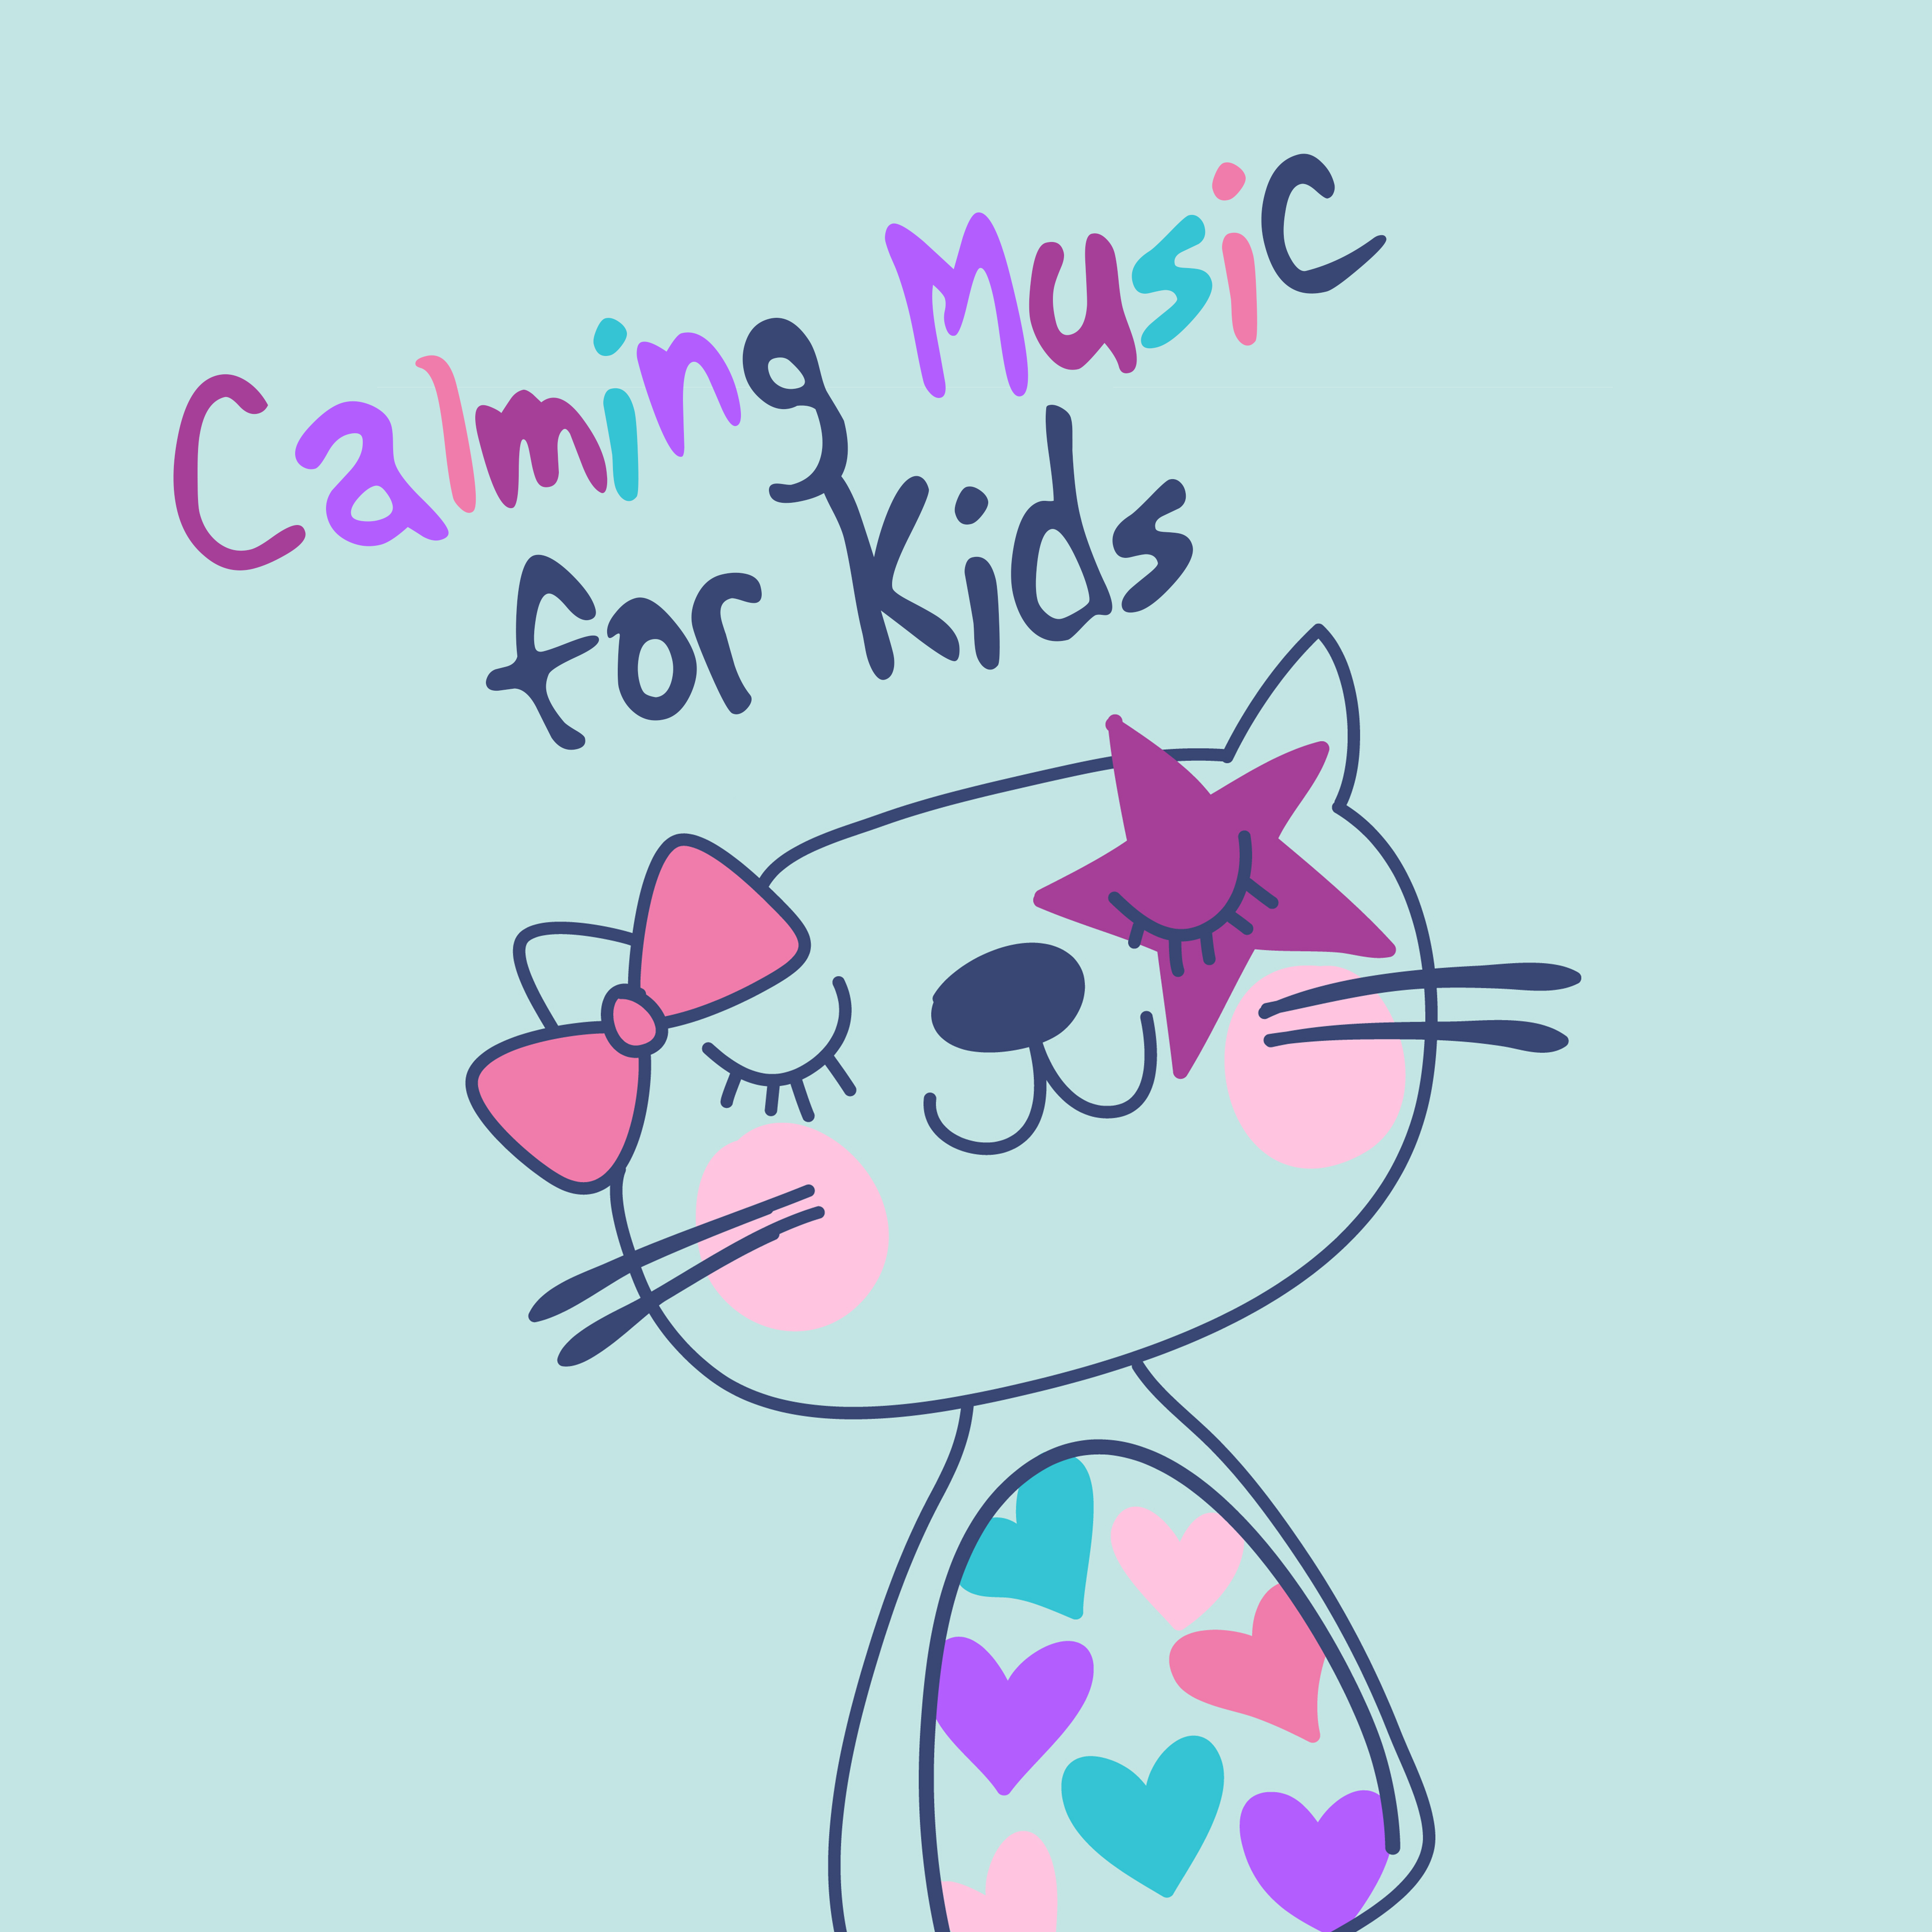 Calming Music for Kids